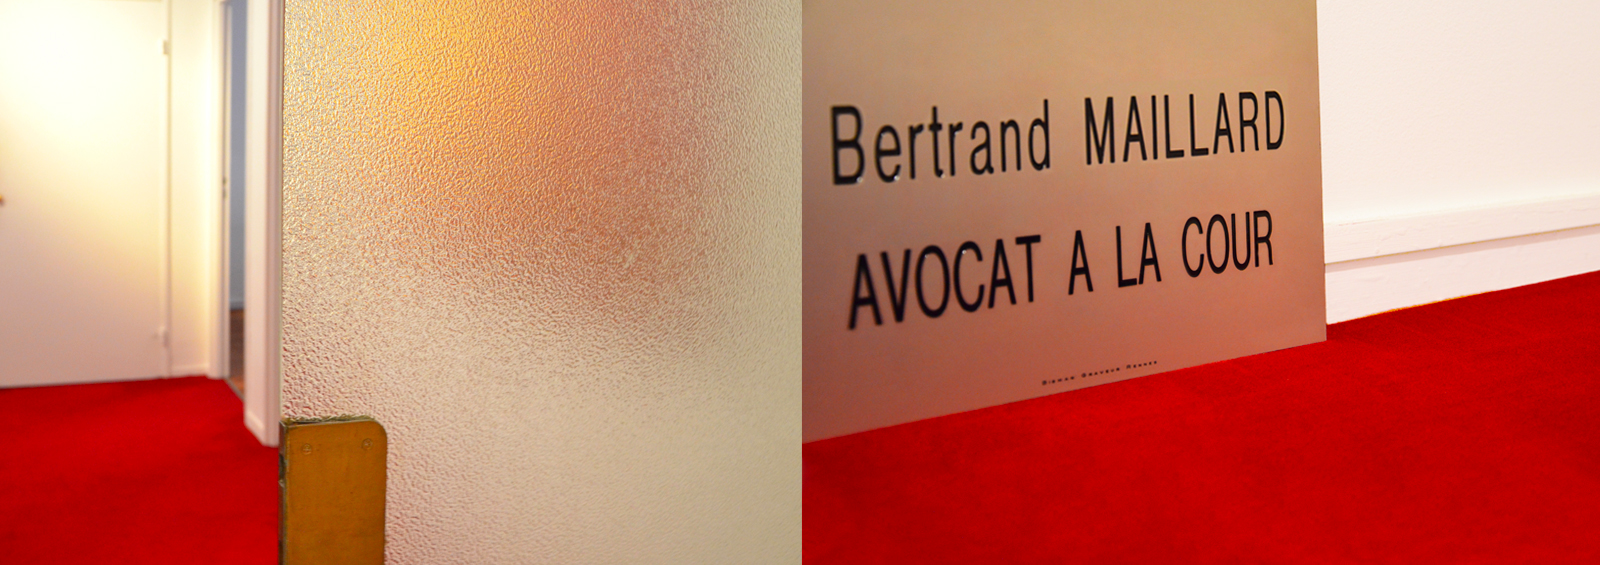 Hall du cabinet / Cabinet d'Avocats Bertrand Maillard / Avocats Rennes